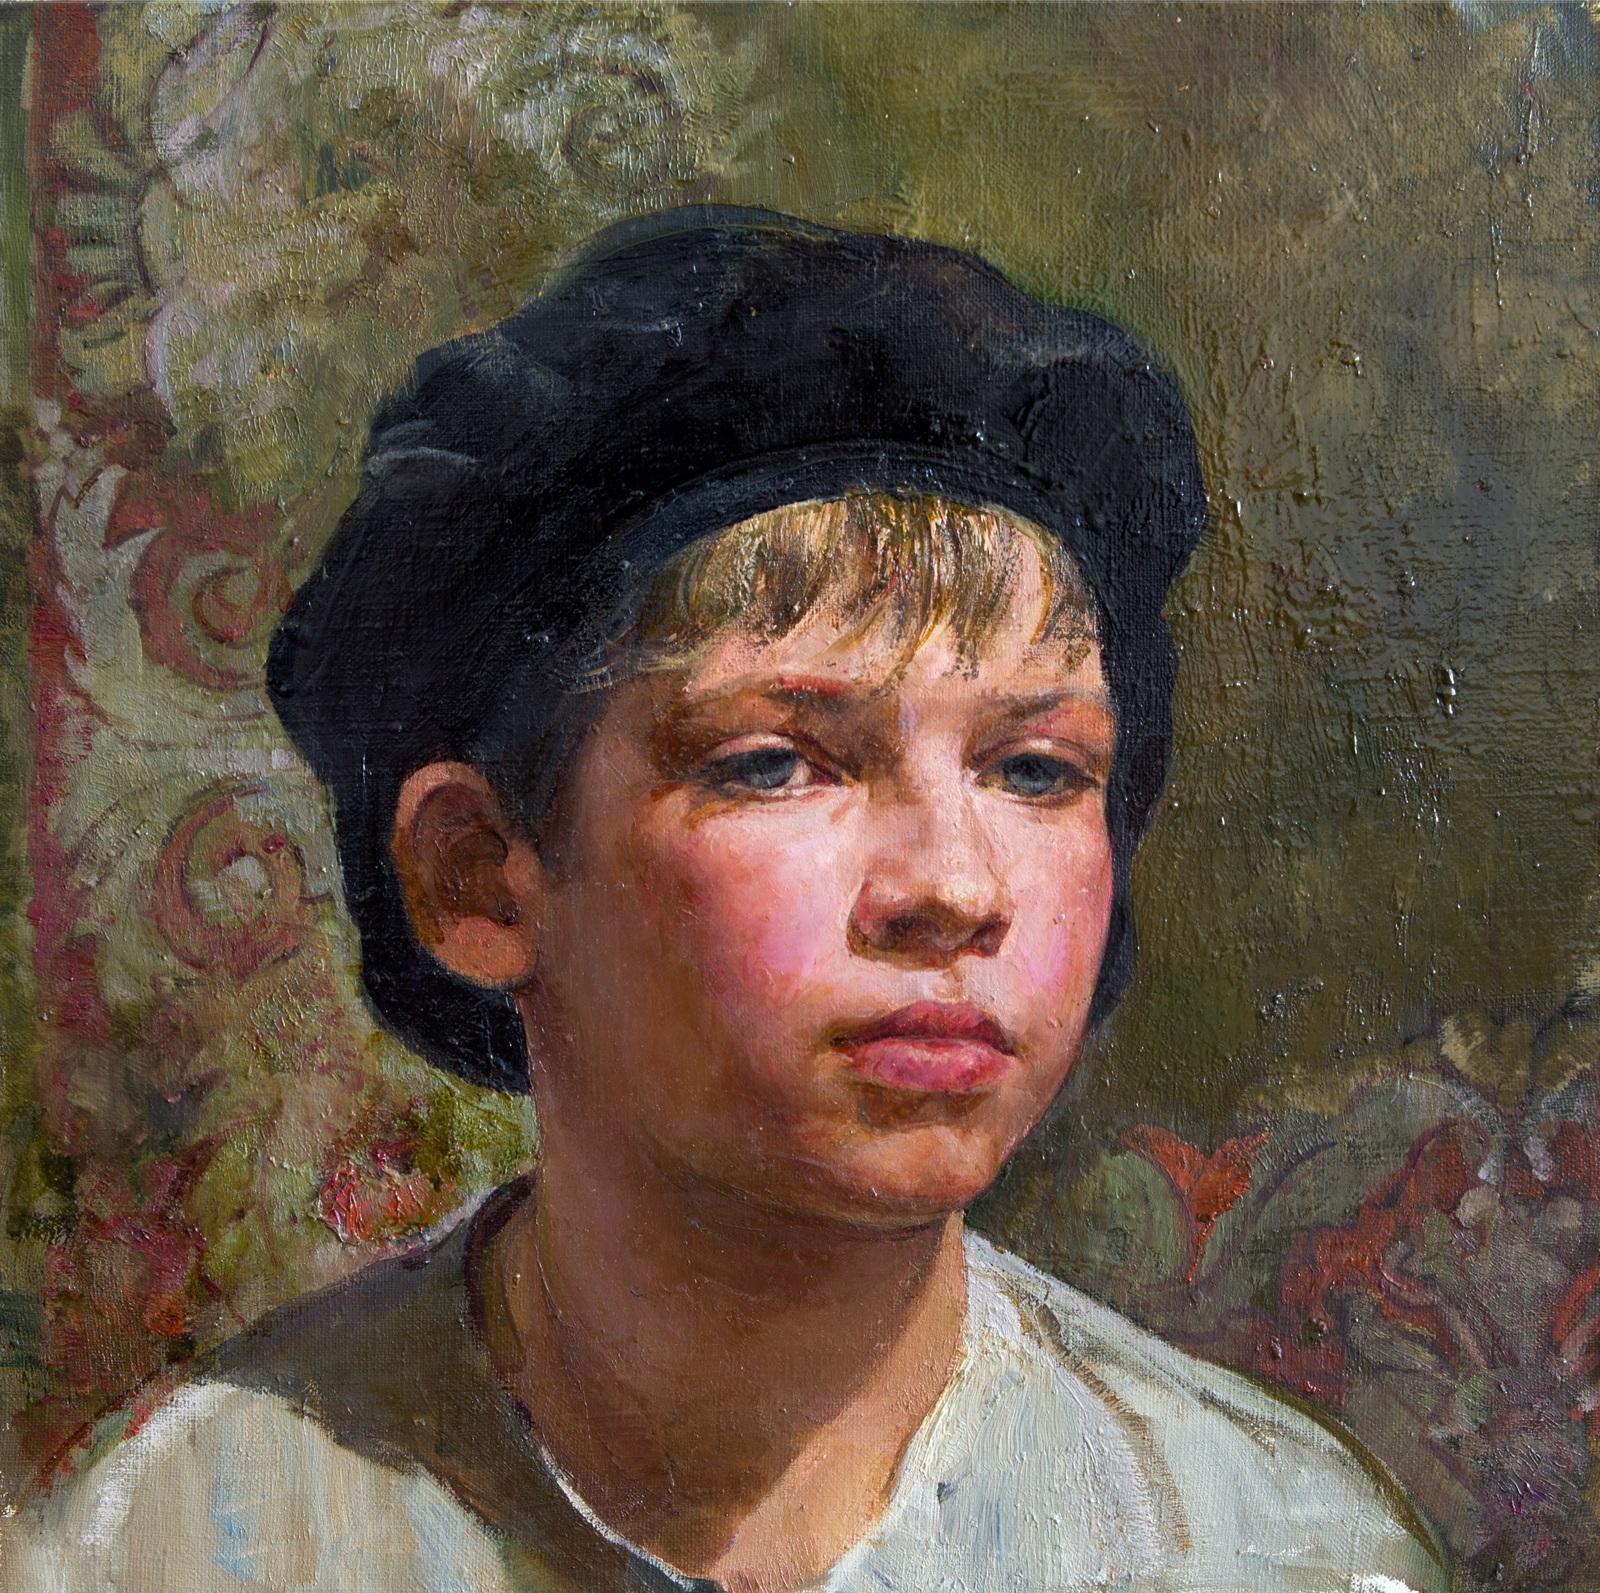 A boy in folk dress